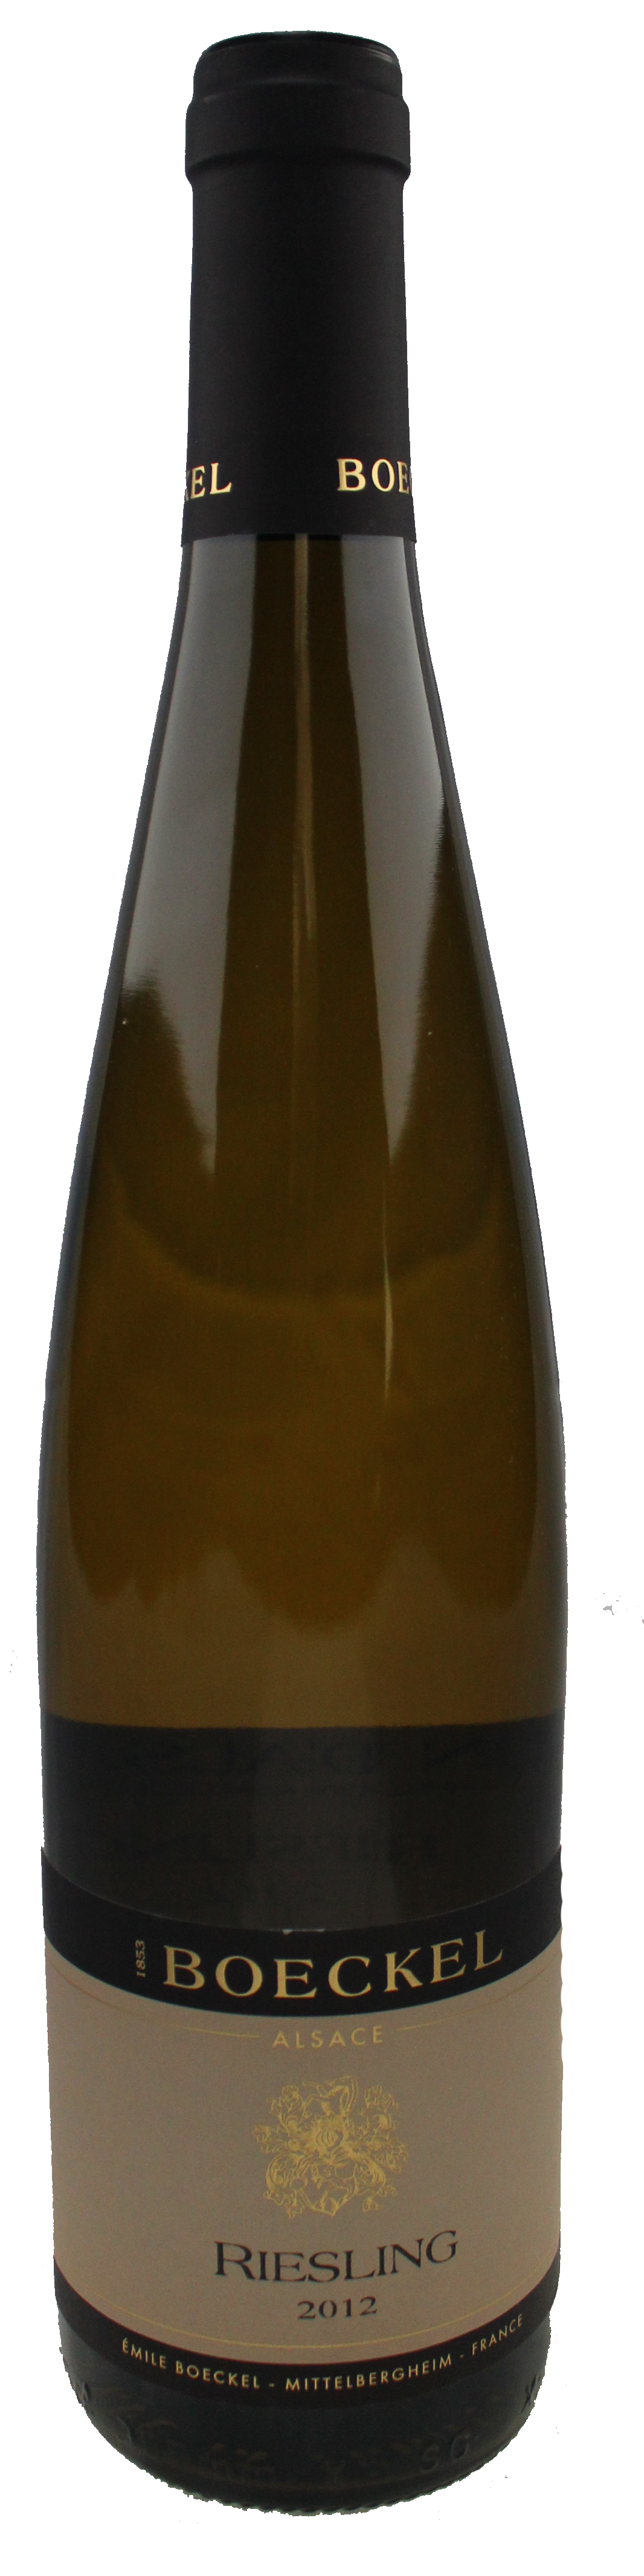 Bottle shot of 2012 Riesling